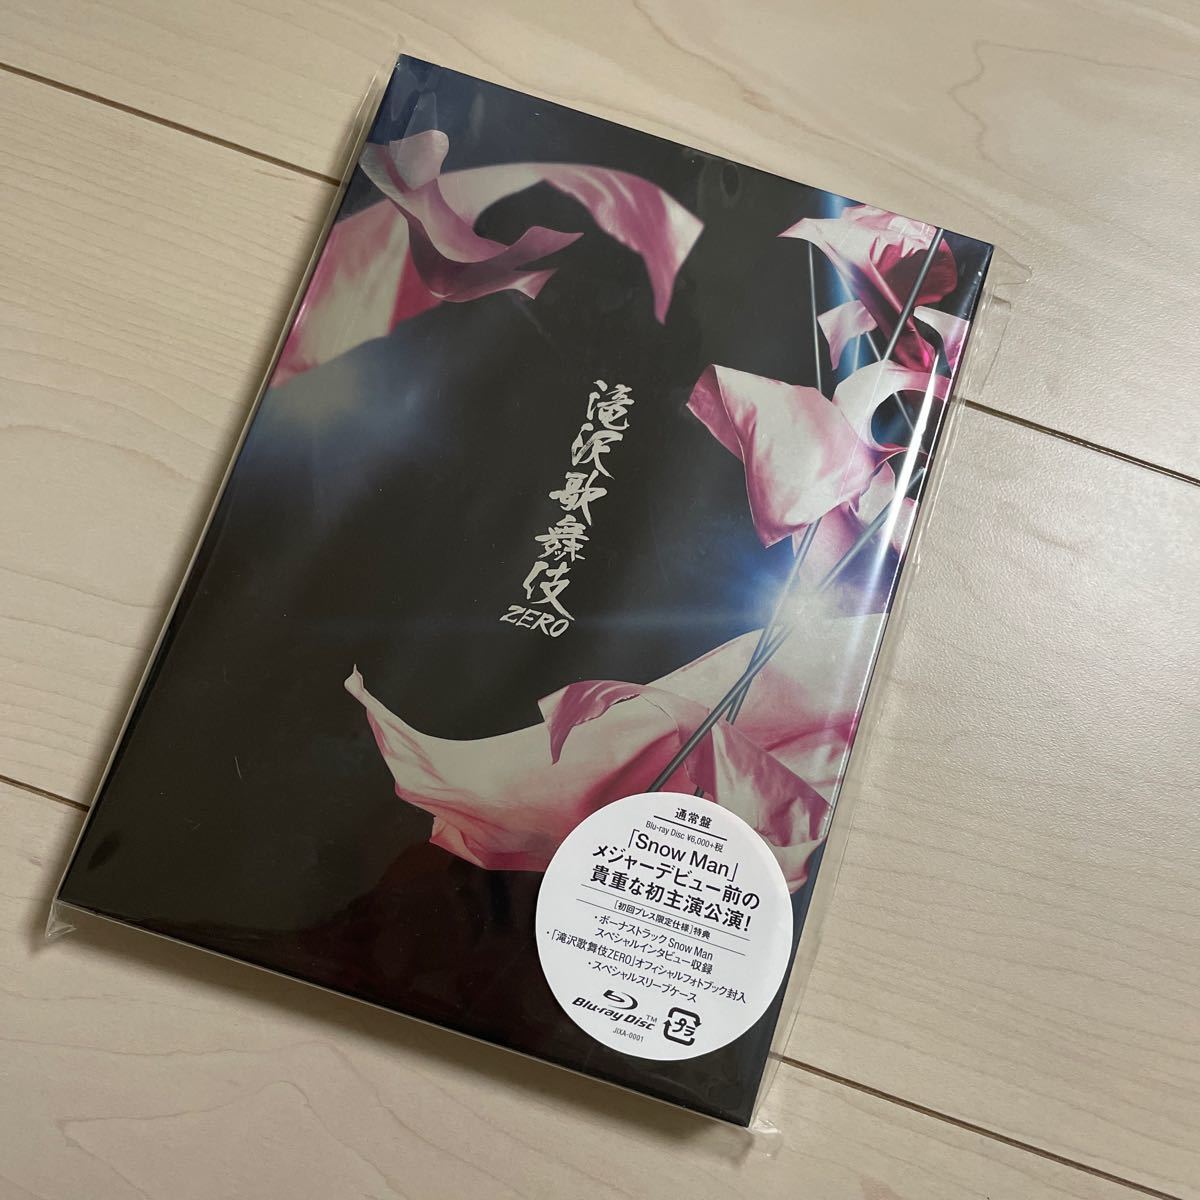 900円 話題の行列 滝沢歌舞伎ZERO 初回プレス限定仕様 DVD BluRay